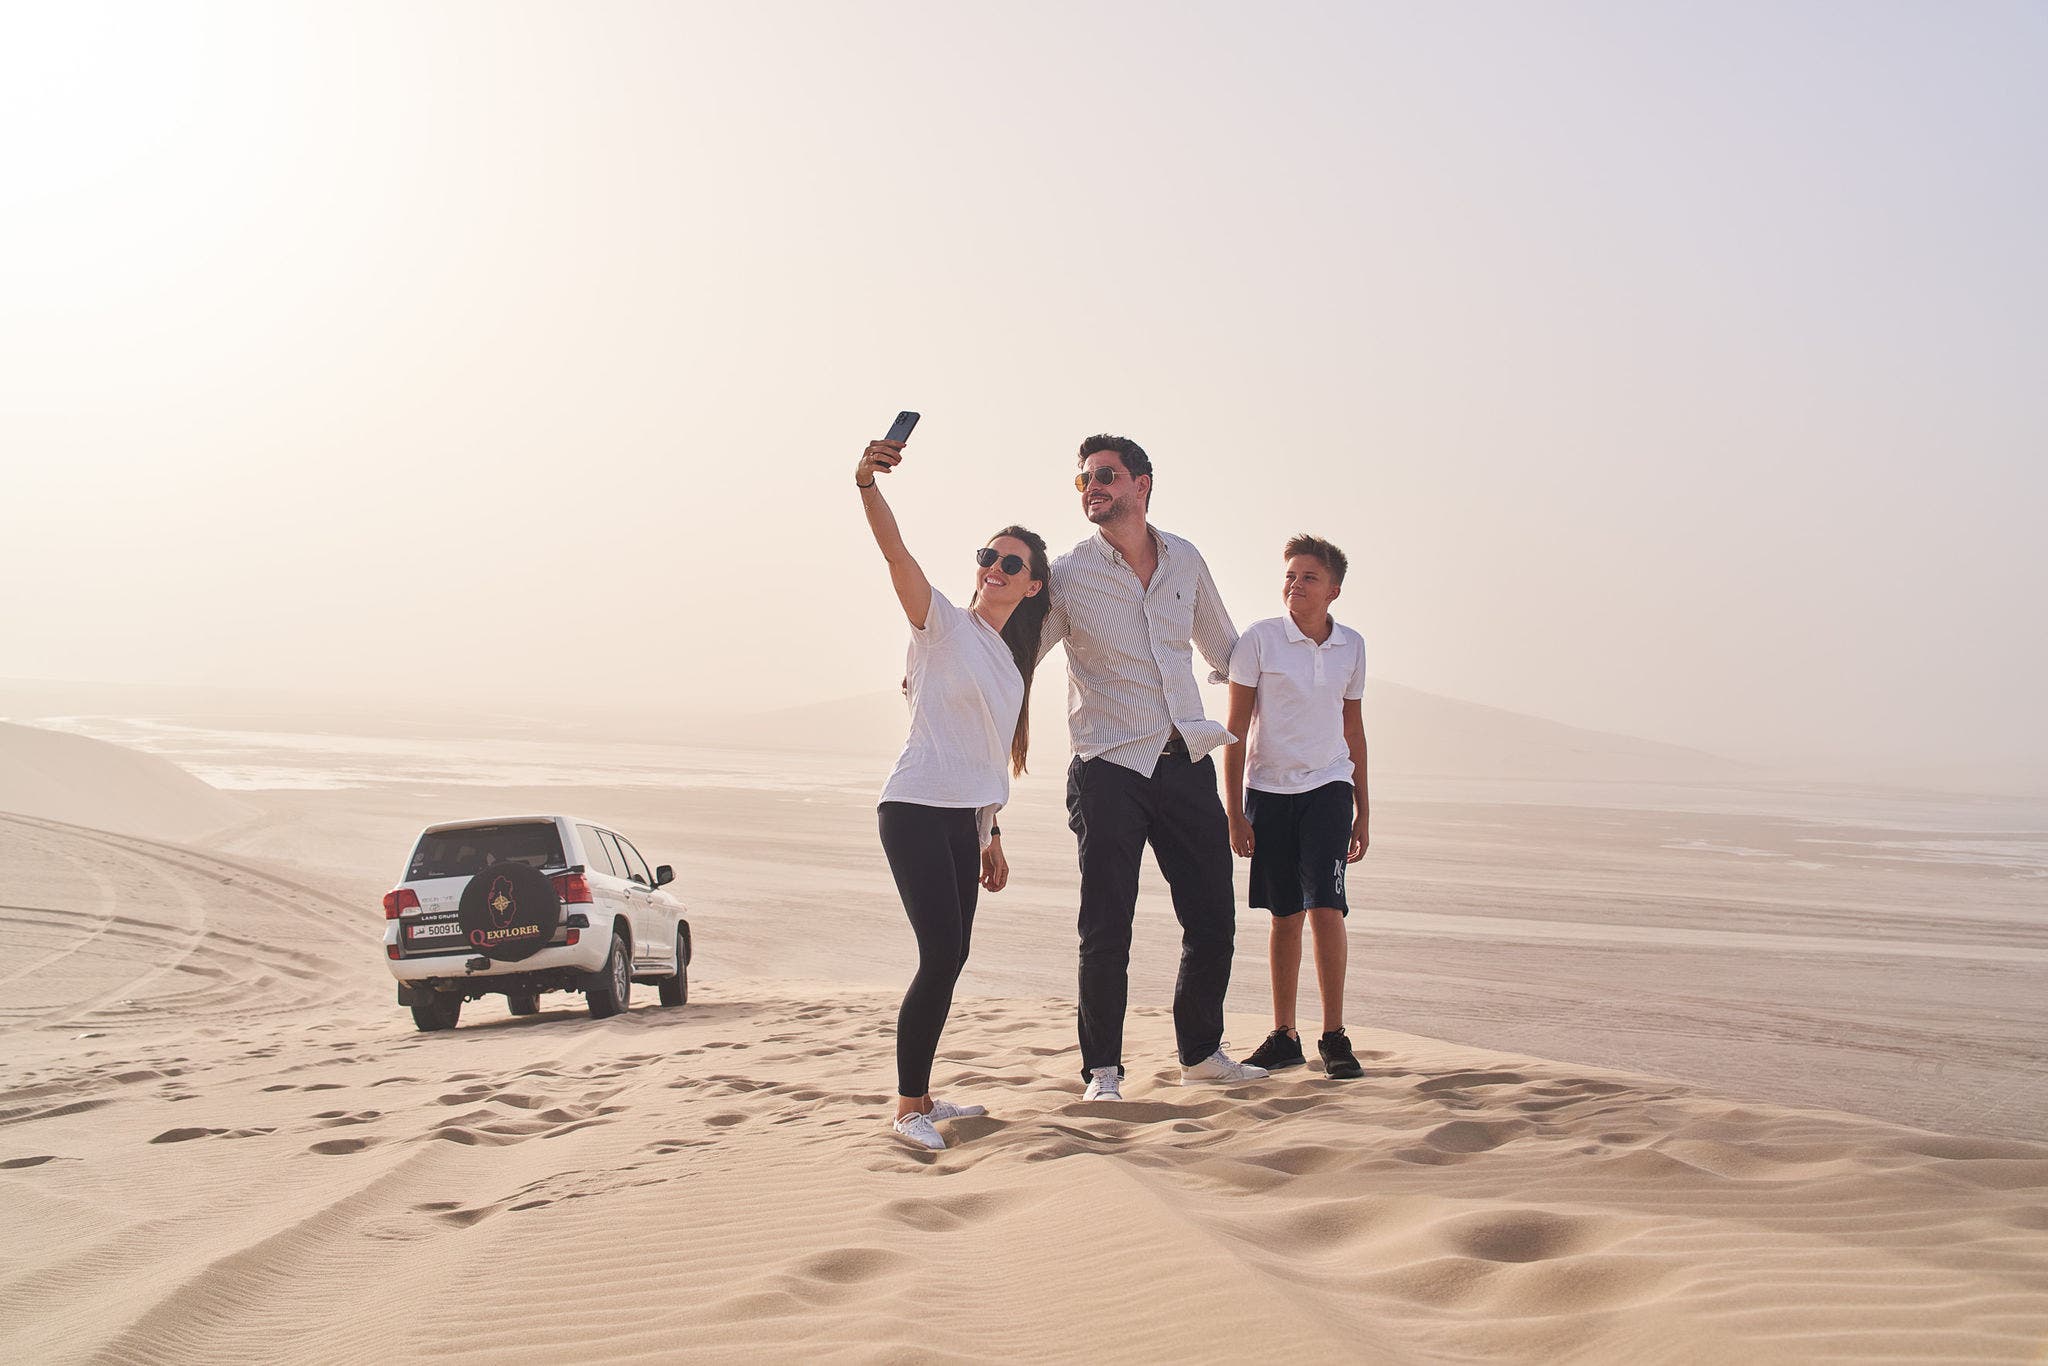 Desert Safari Adventures in Qatar